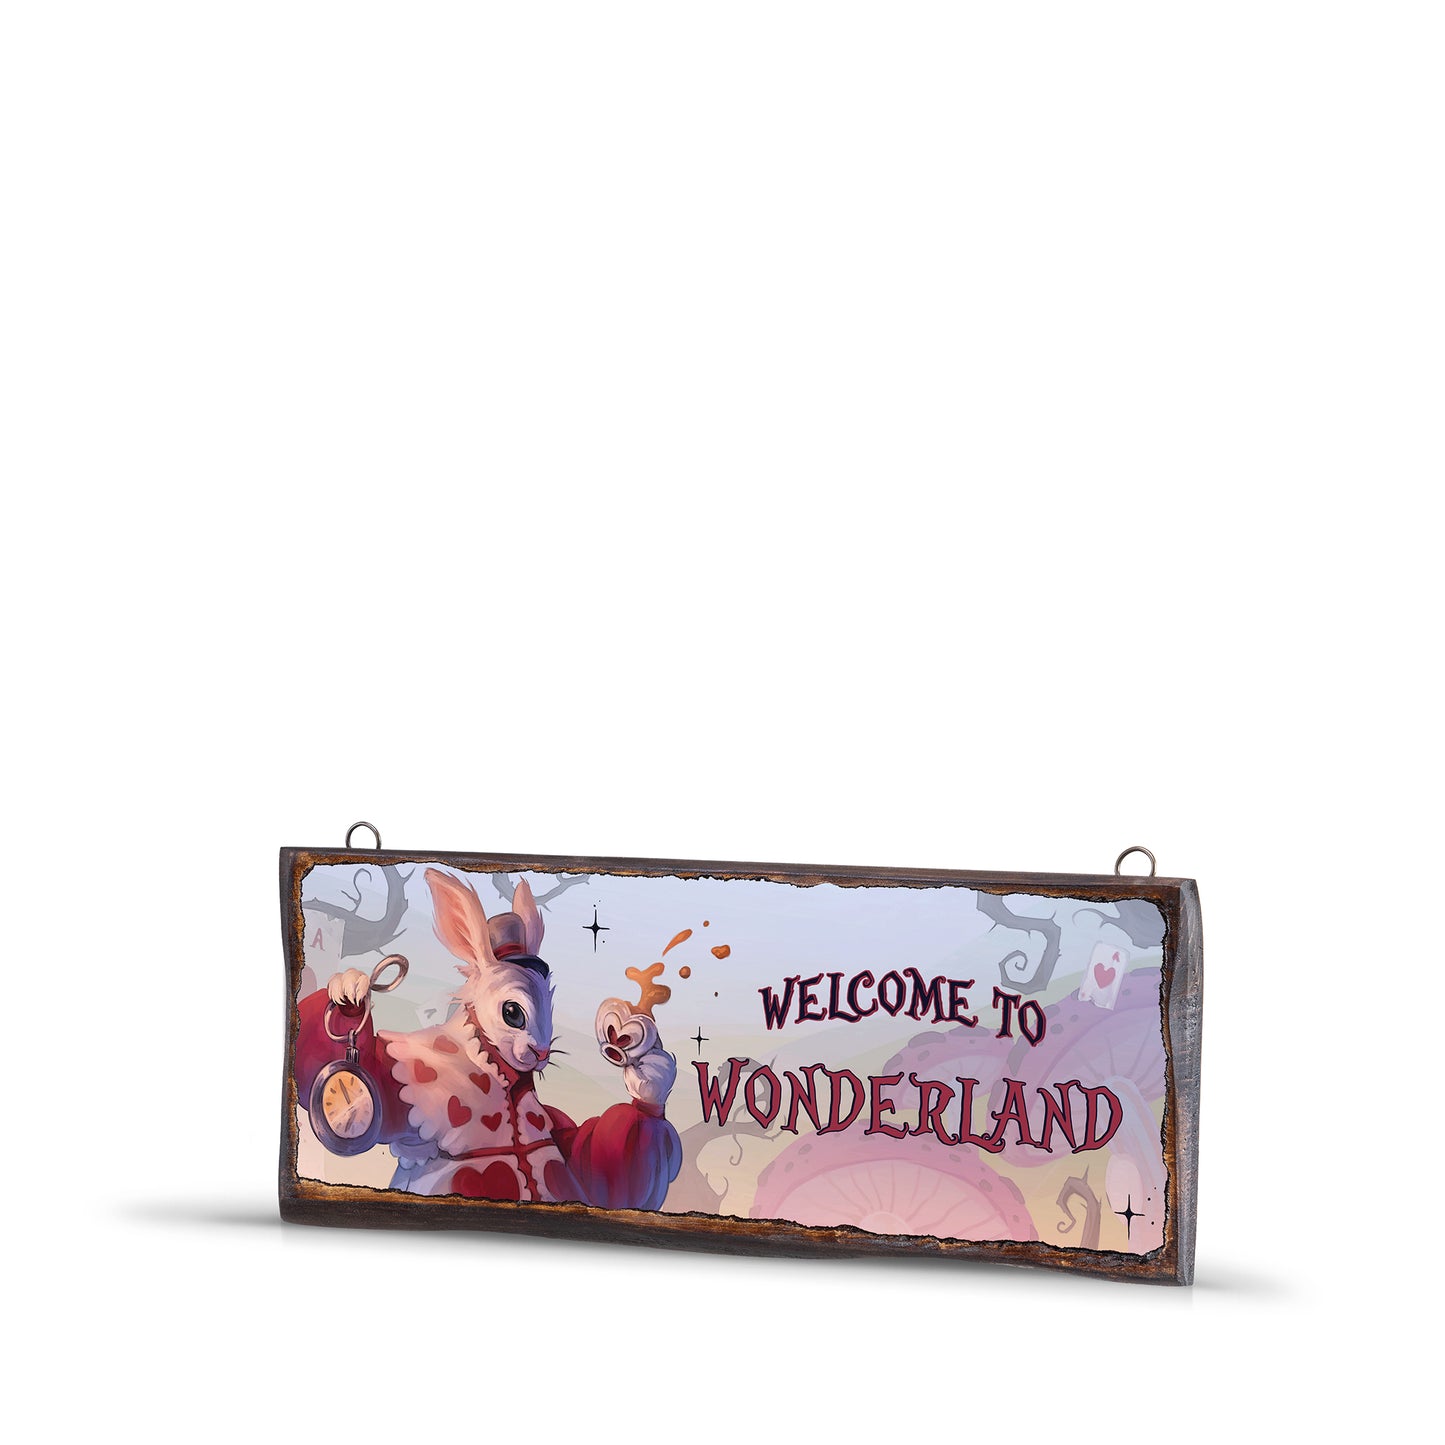 WELCOME TO WONDERLAND WOODEN SIGN - WS033